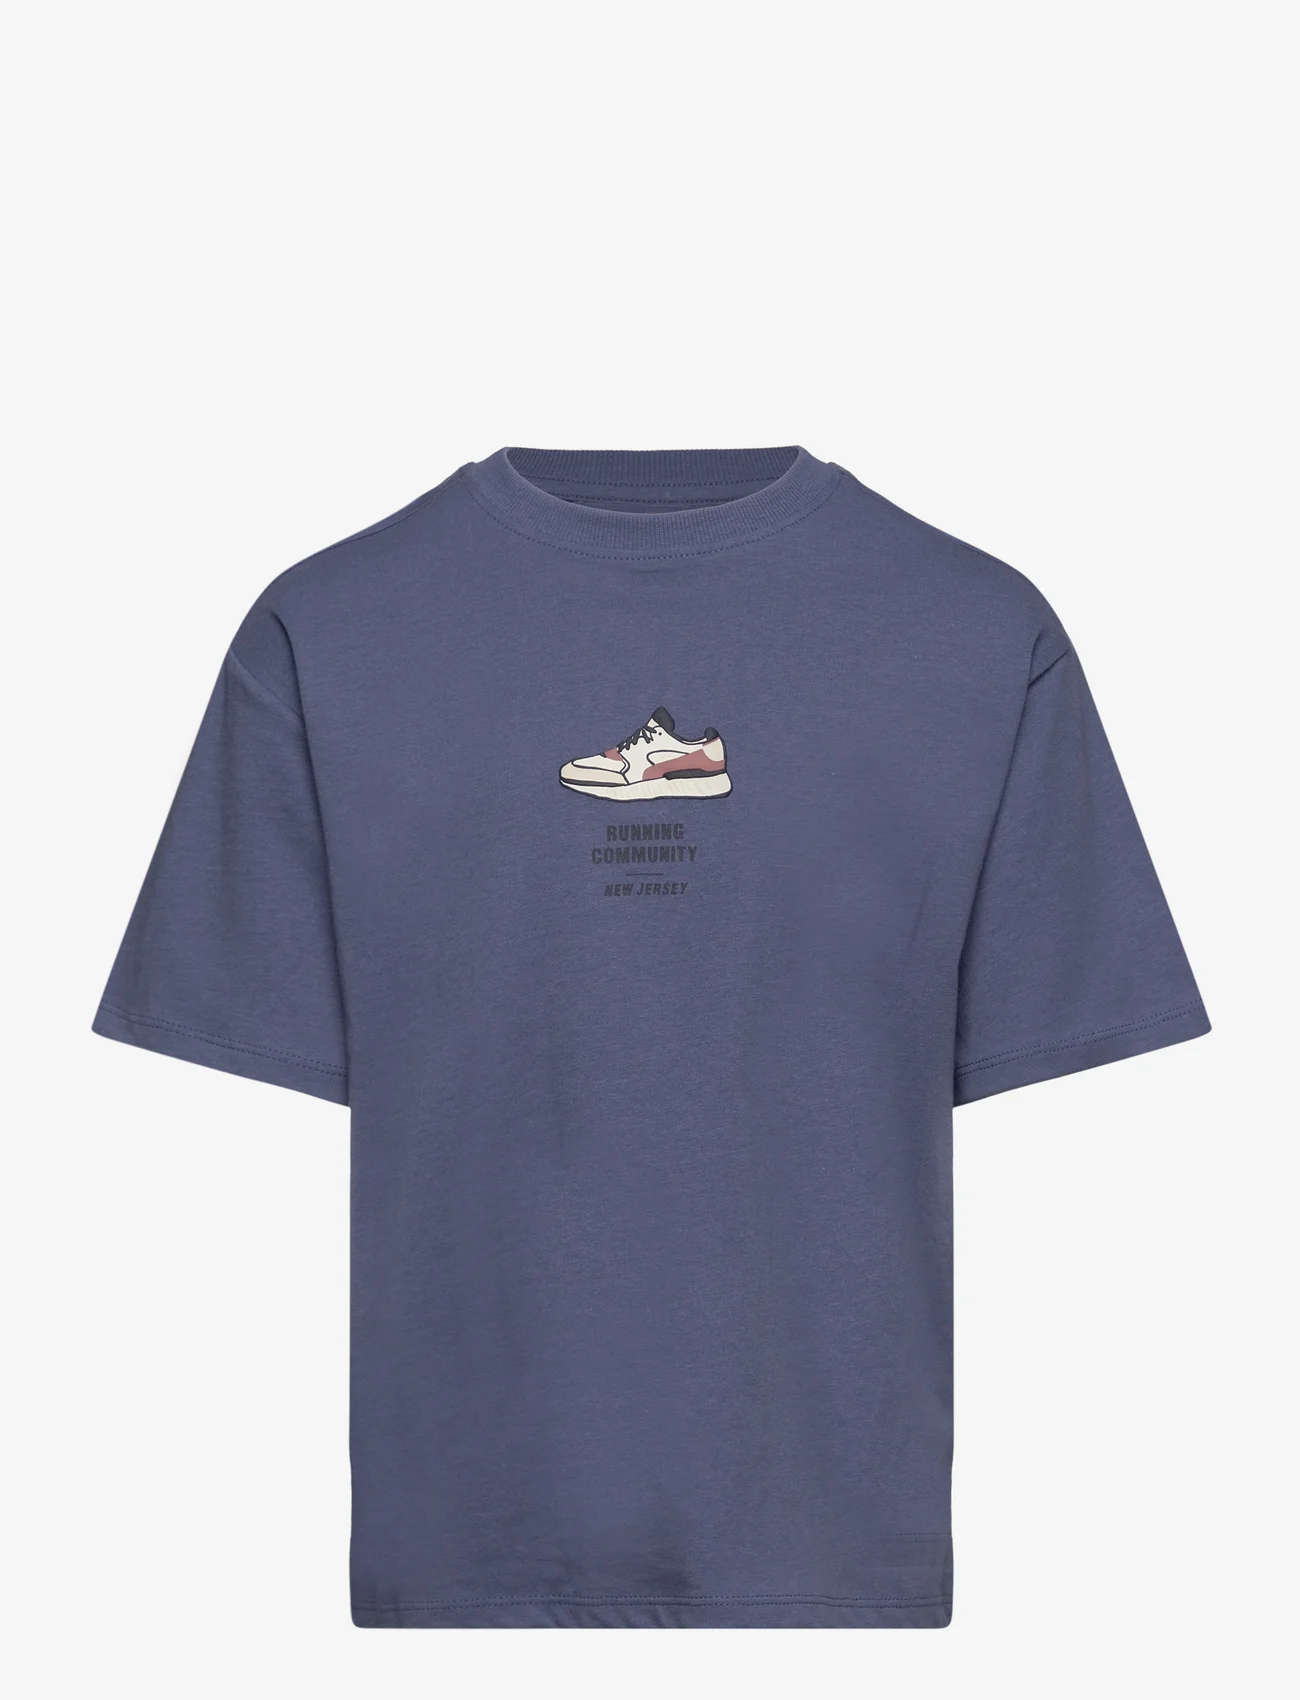 Mango - Message cotton T-shirt - kortärmade t-shirts - medium blue - 0